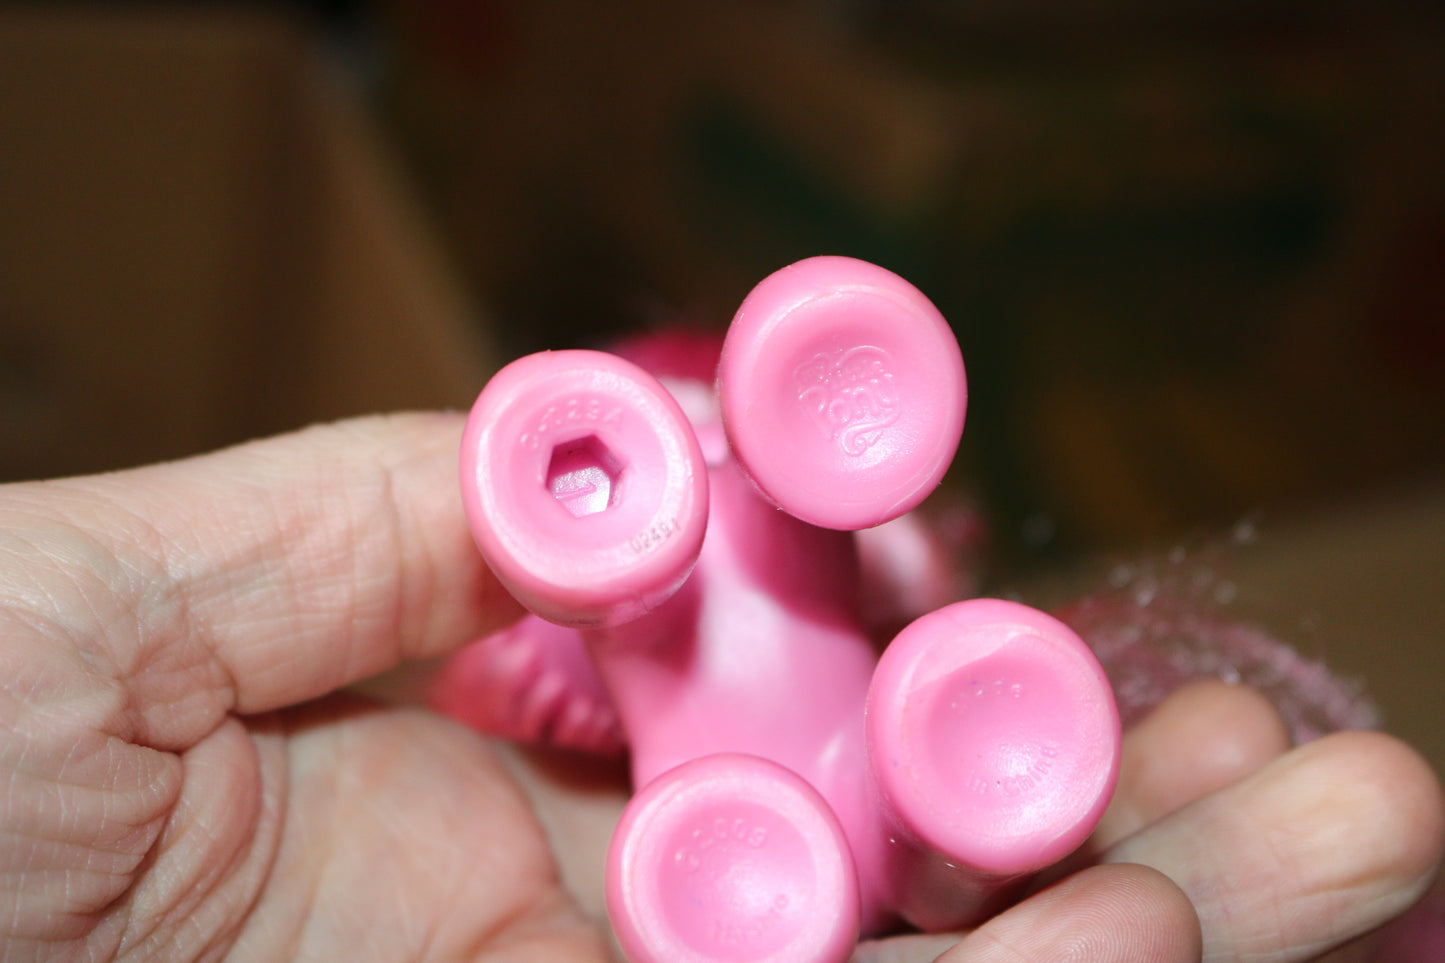 My Little Pony G3.5 Pinkie Pie Convertible Hasbro 2009 Mlp Figure Toy